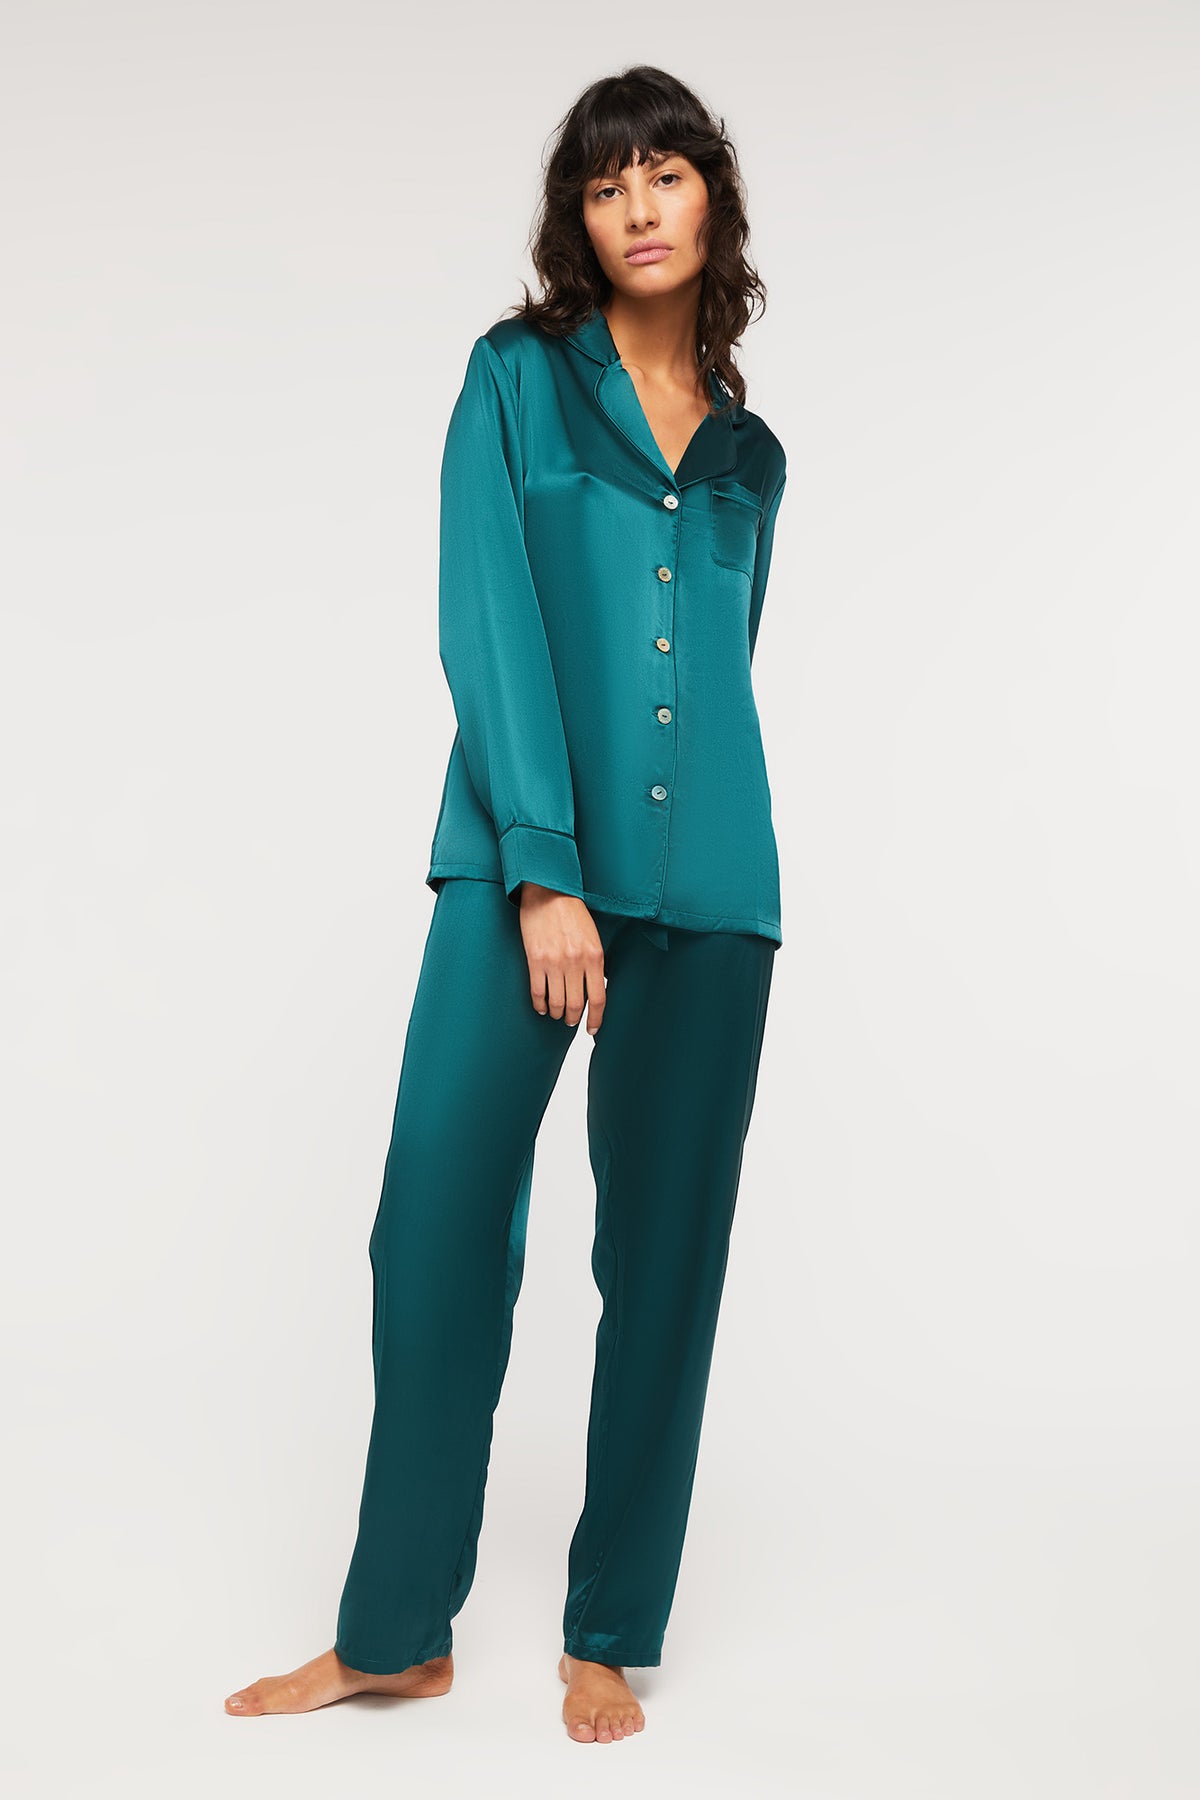 Fine Finishes Pyjama in Emerald - 100% Silk | Ginia Sleep